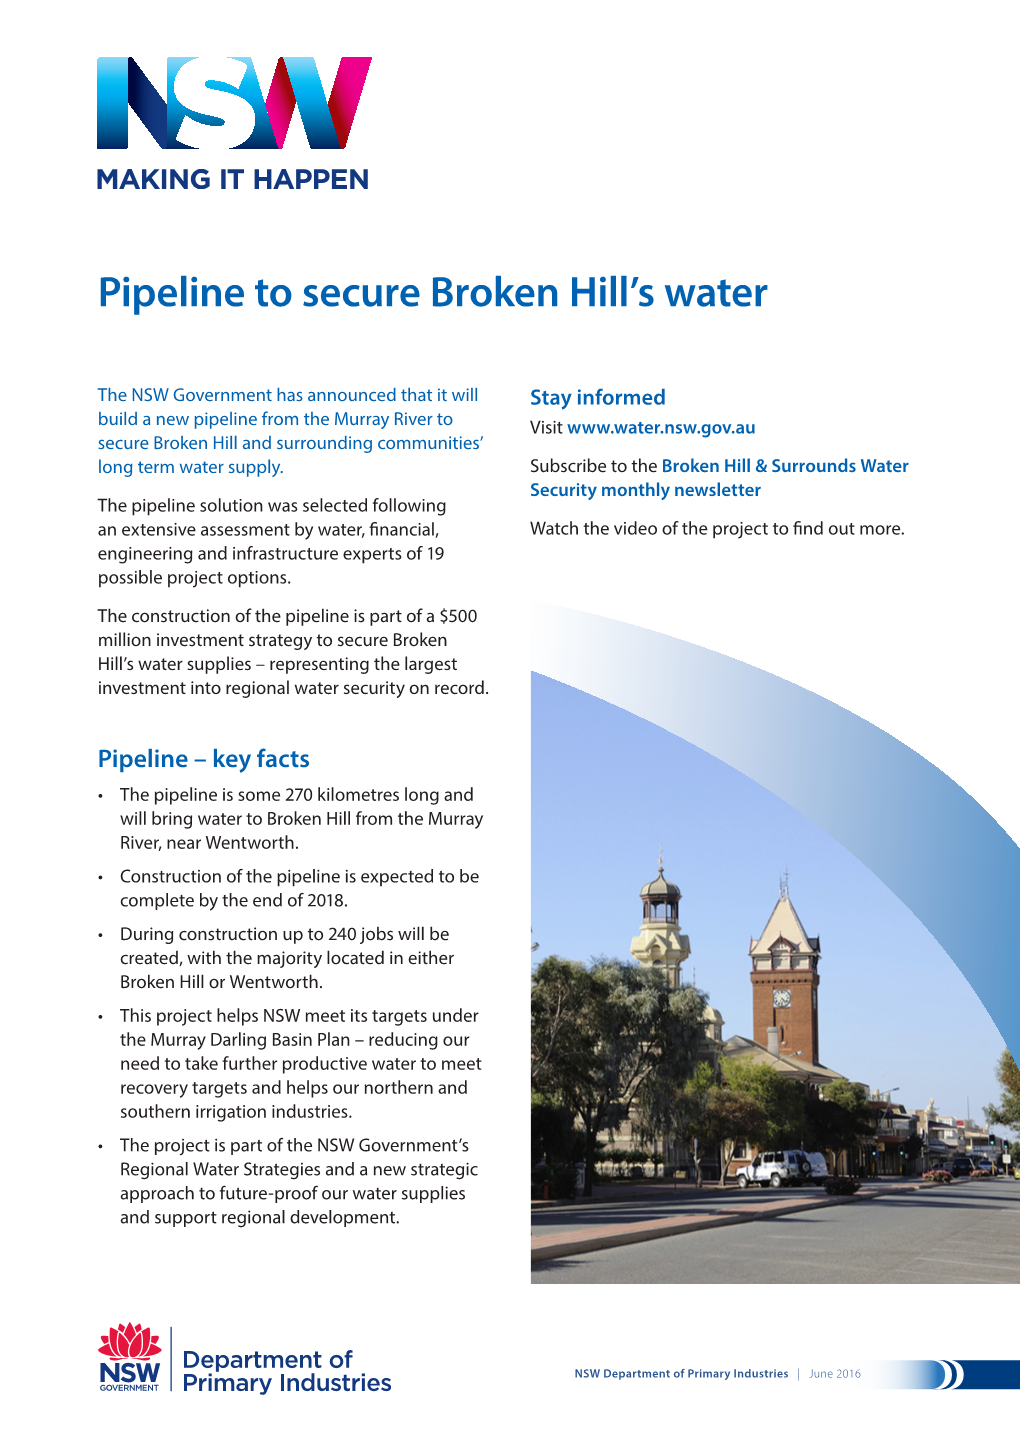 Pipeline to Secure Broken Hill's Water